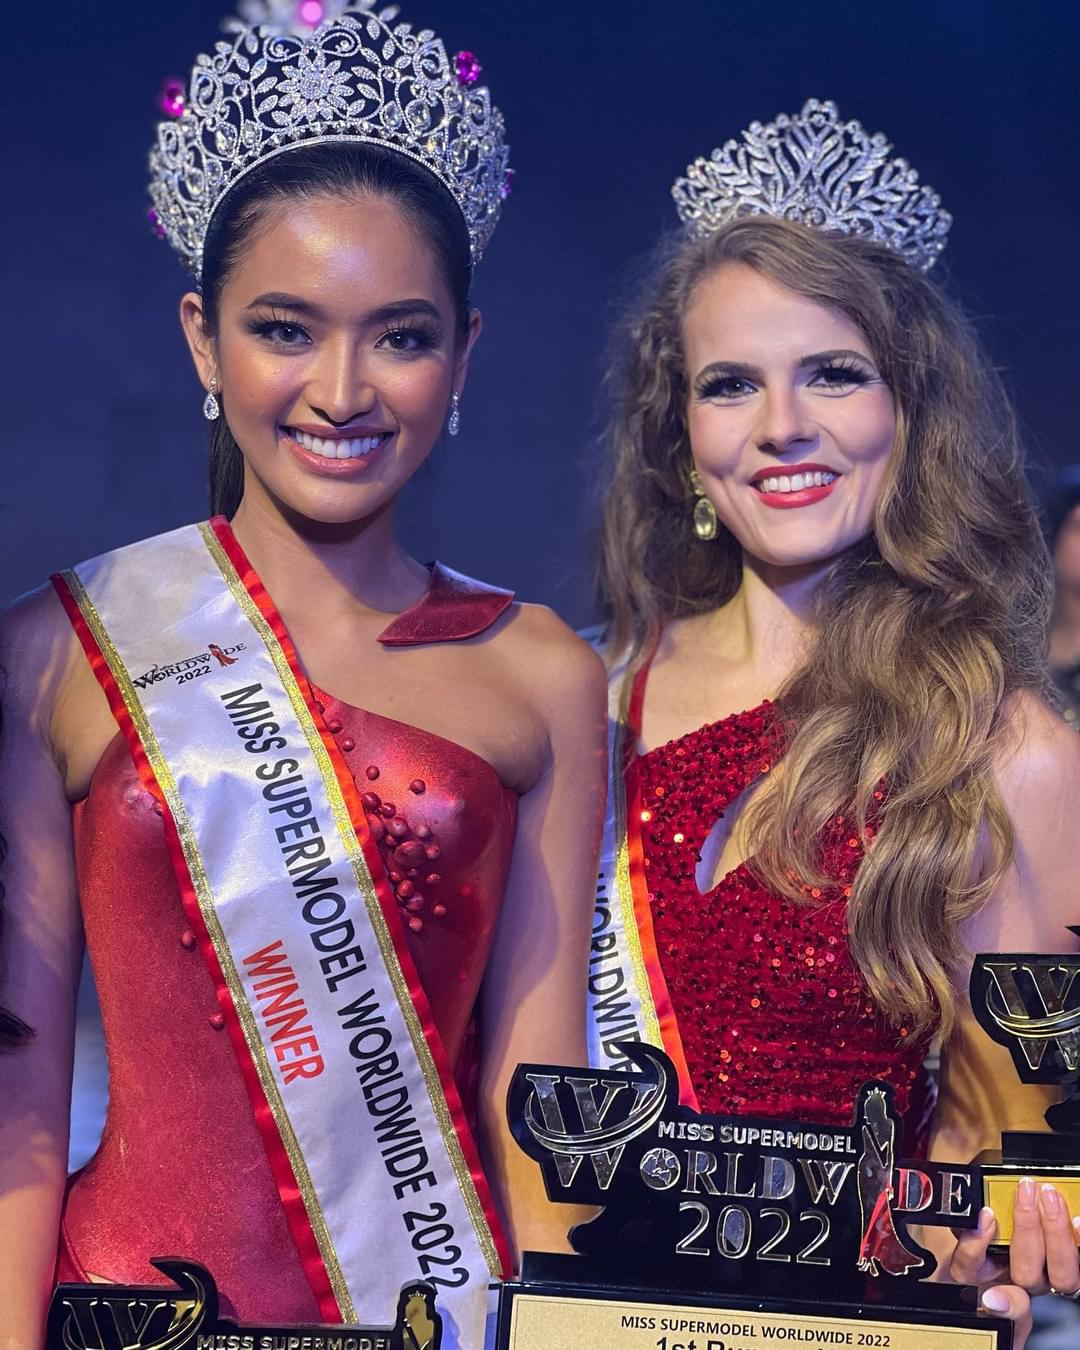 Philippines Alexandra Mae Rosales Captures 2022 Miss Supermodel Worldwide Title Foppacasa 8156